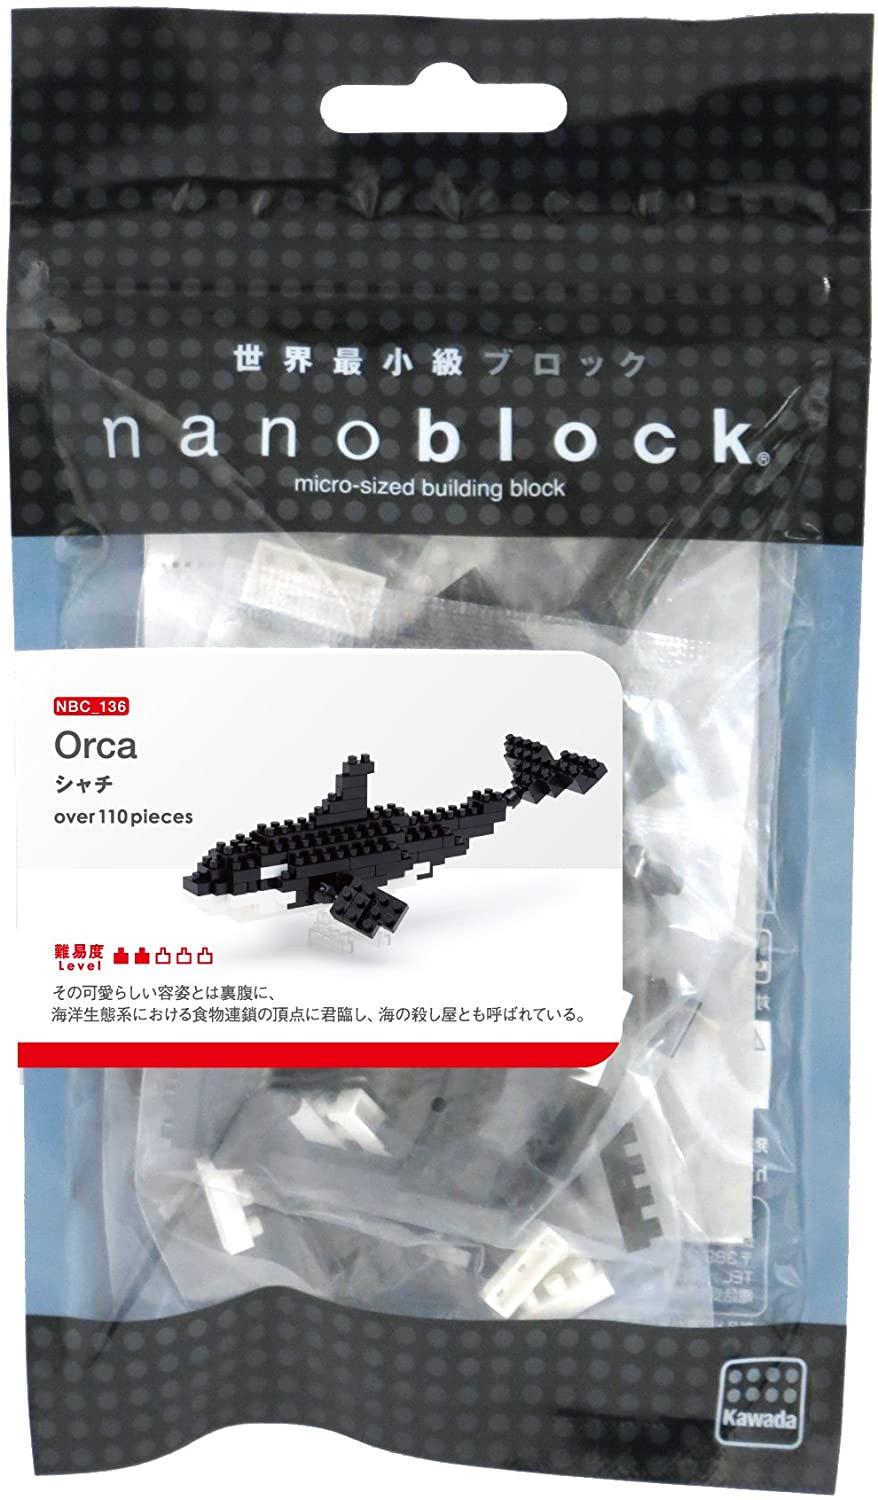 Orca Nanoblock Micro-Sized Building Block Kawada Mini Construction Toy NBC 136 